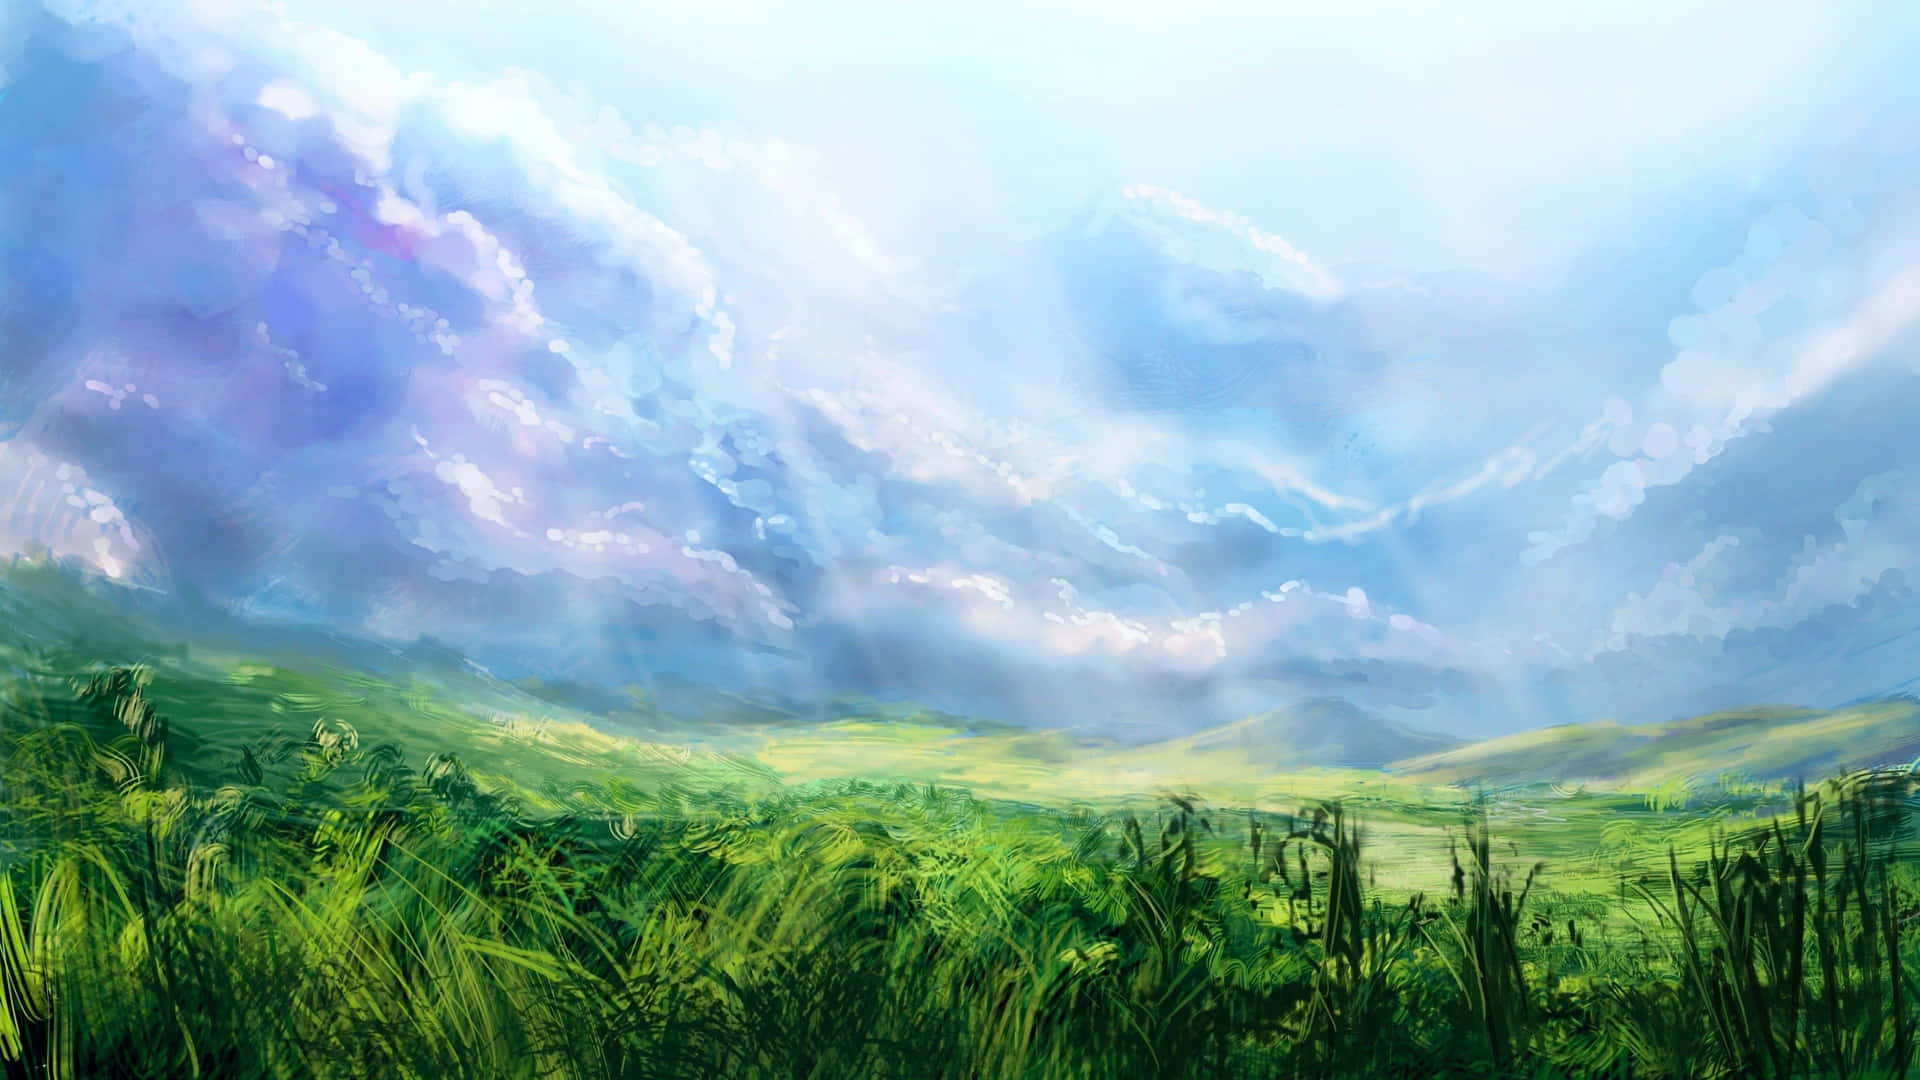 Anime sea clouds landscape grass nature sky wallpaper  2560x1440  1024237   WallpaperUP